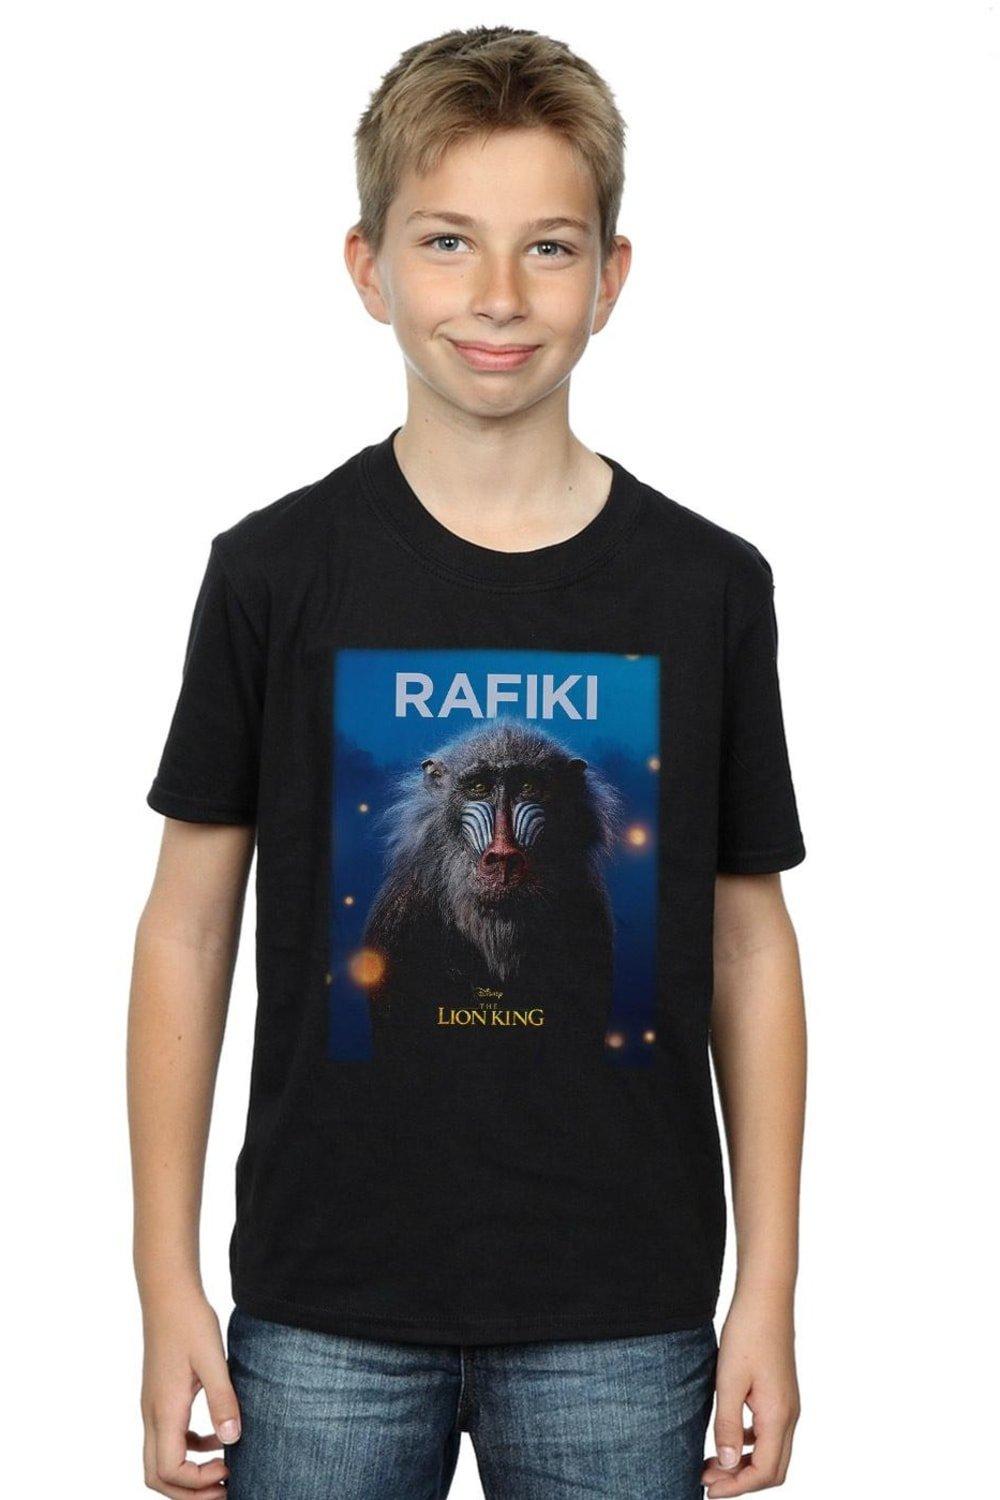 The Lion King Movie Rafiki Poster T-Shirt